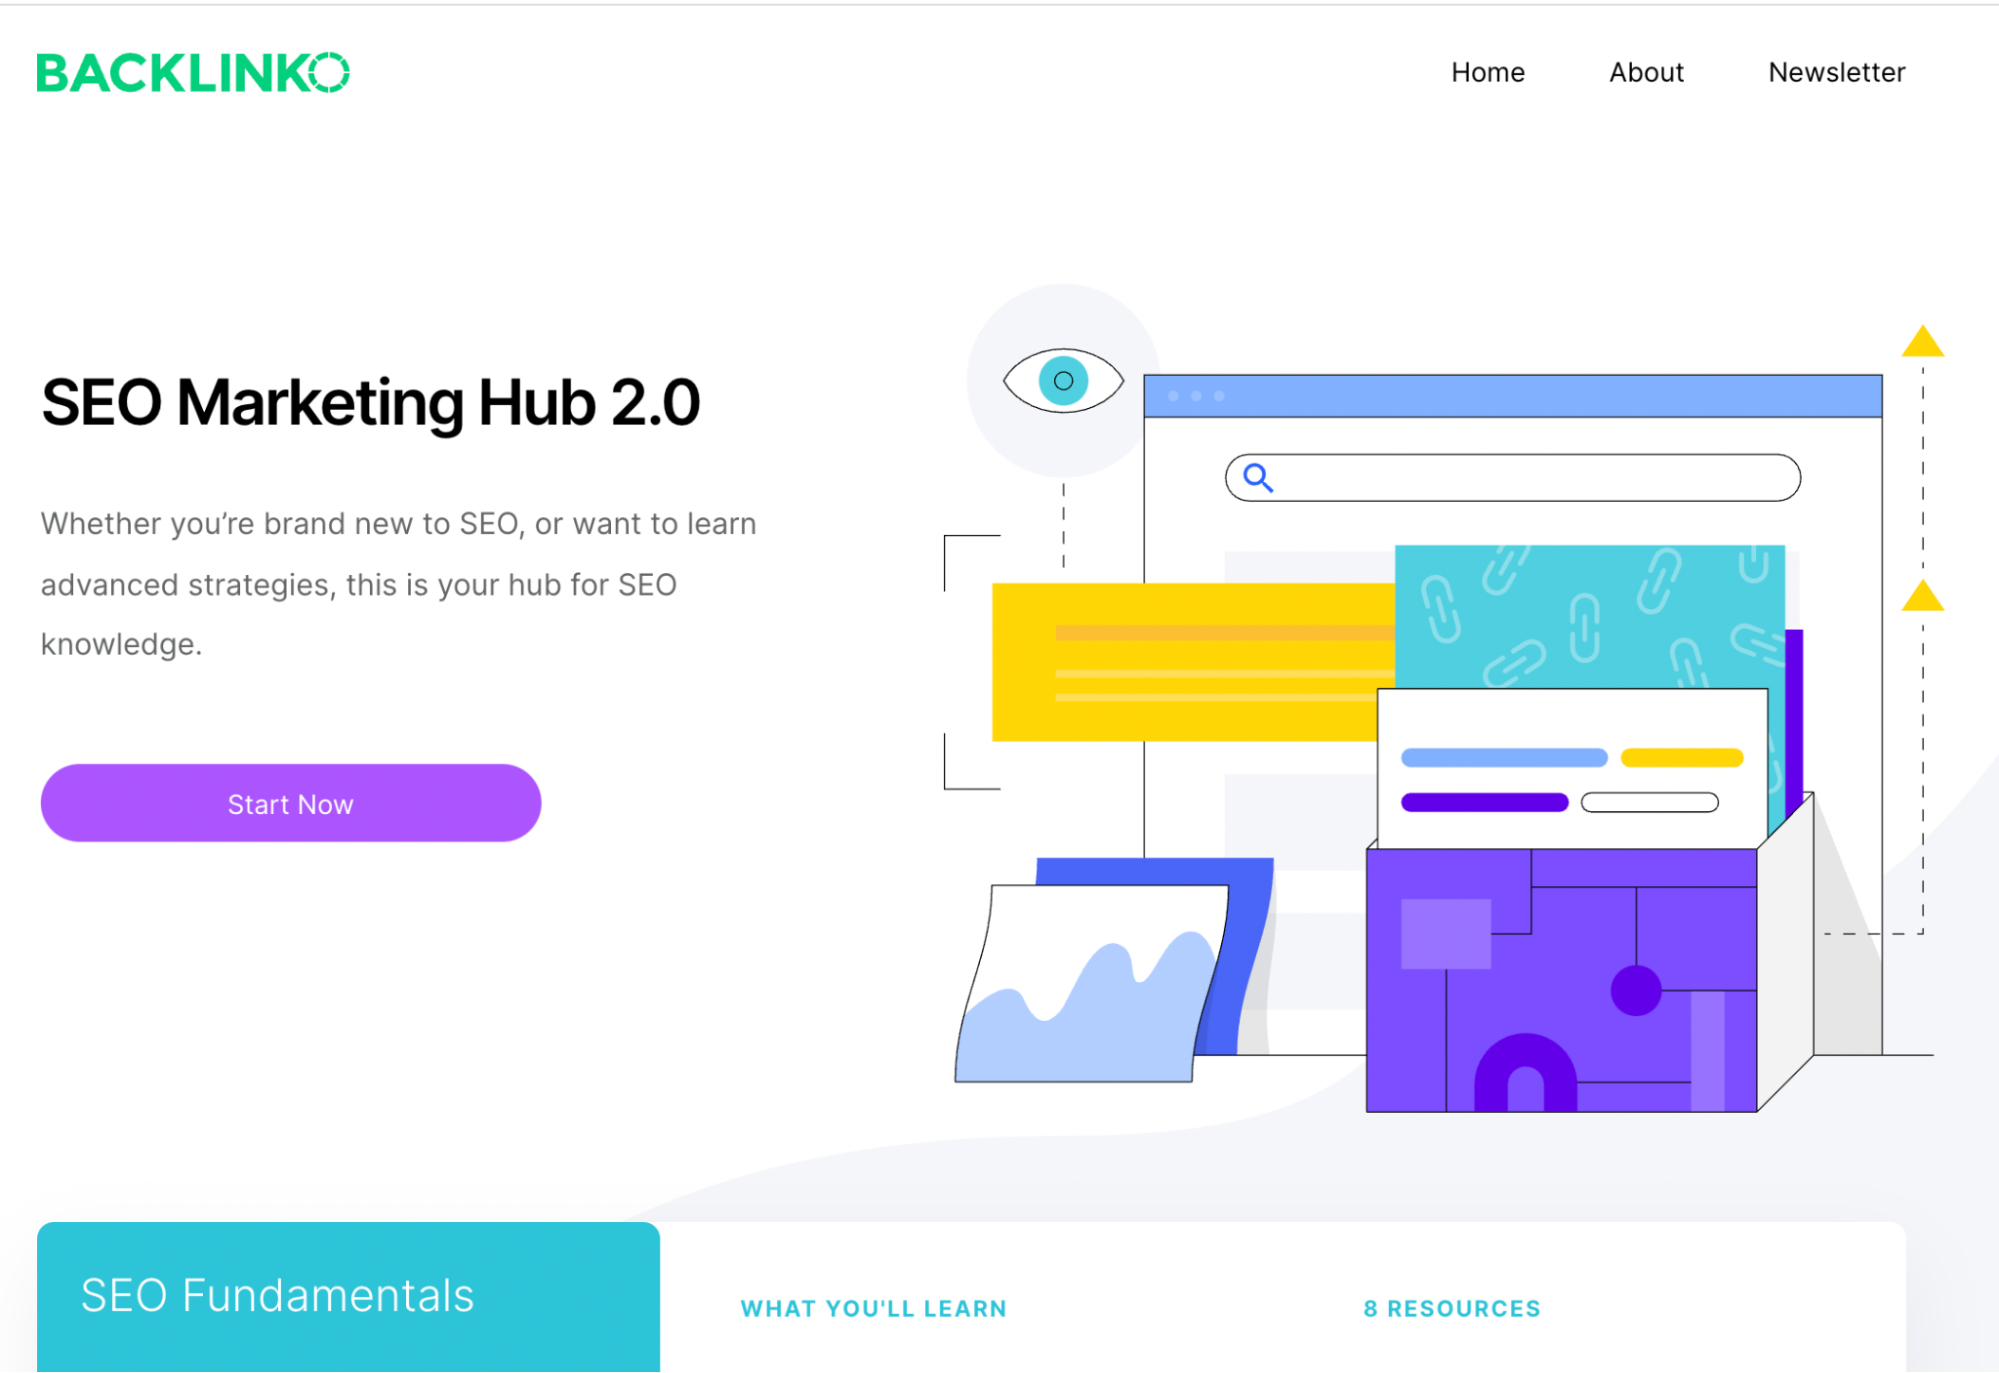 Screenshot of Backlinko's SEO Marketing Hub 2.0